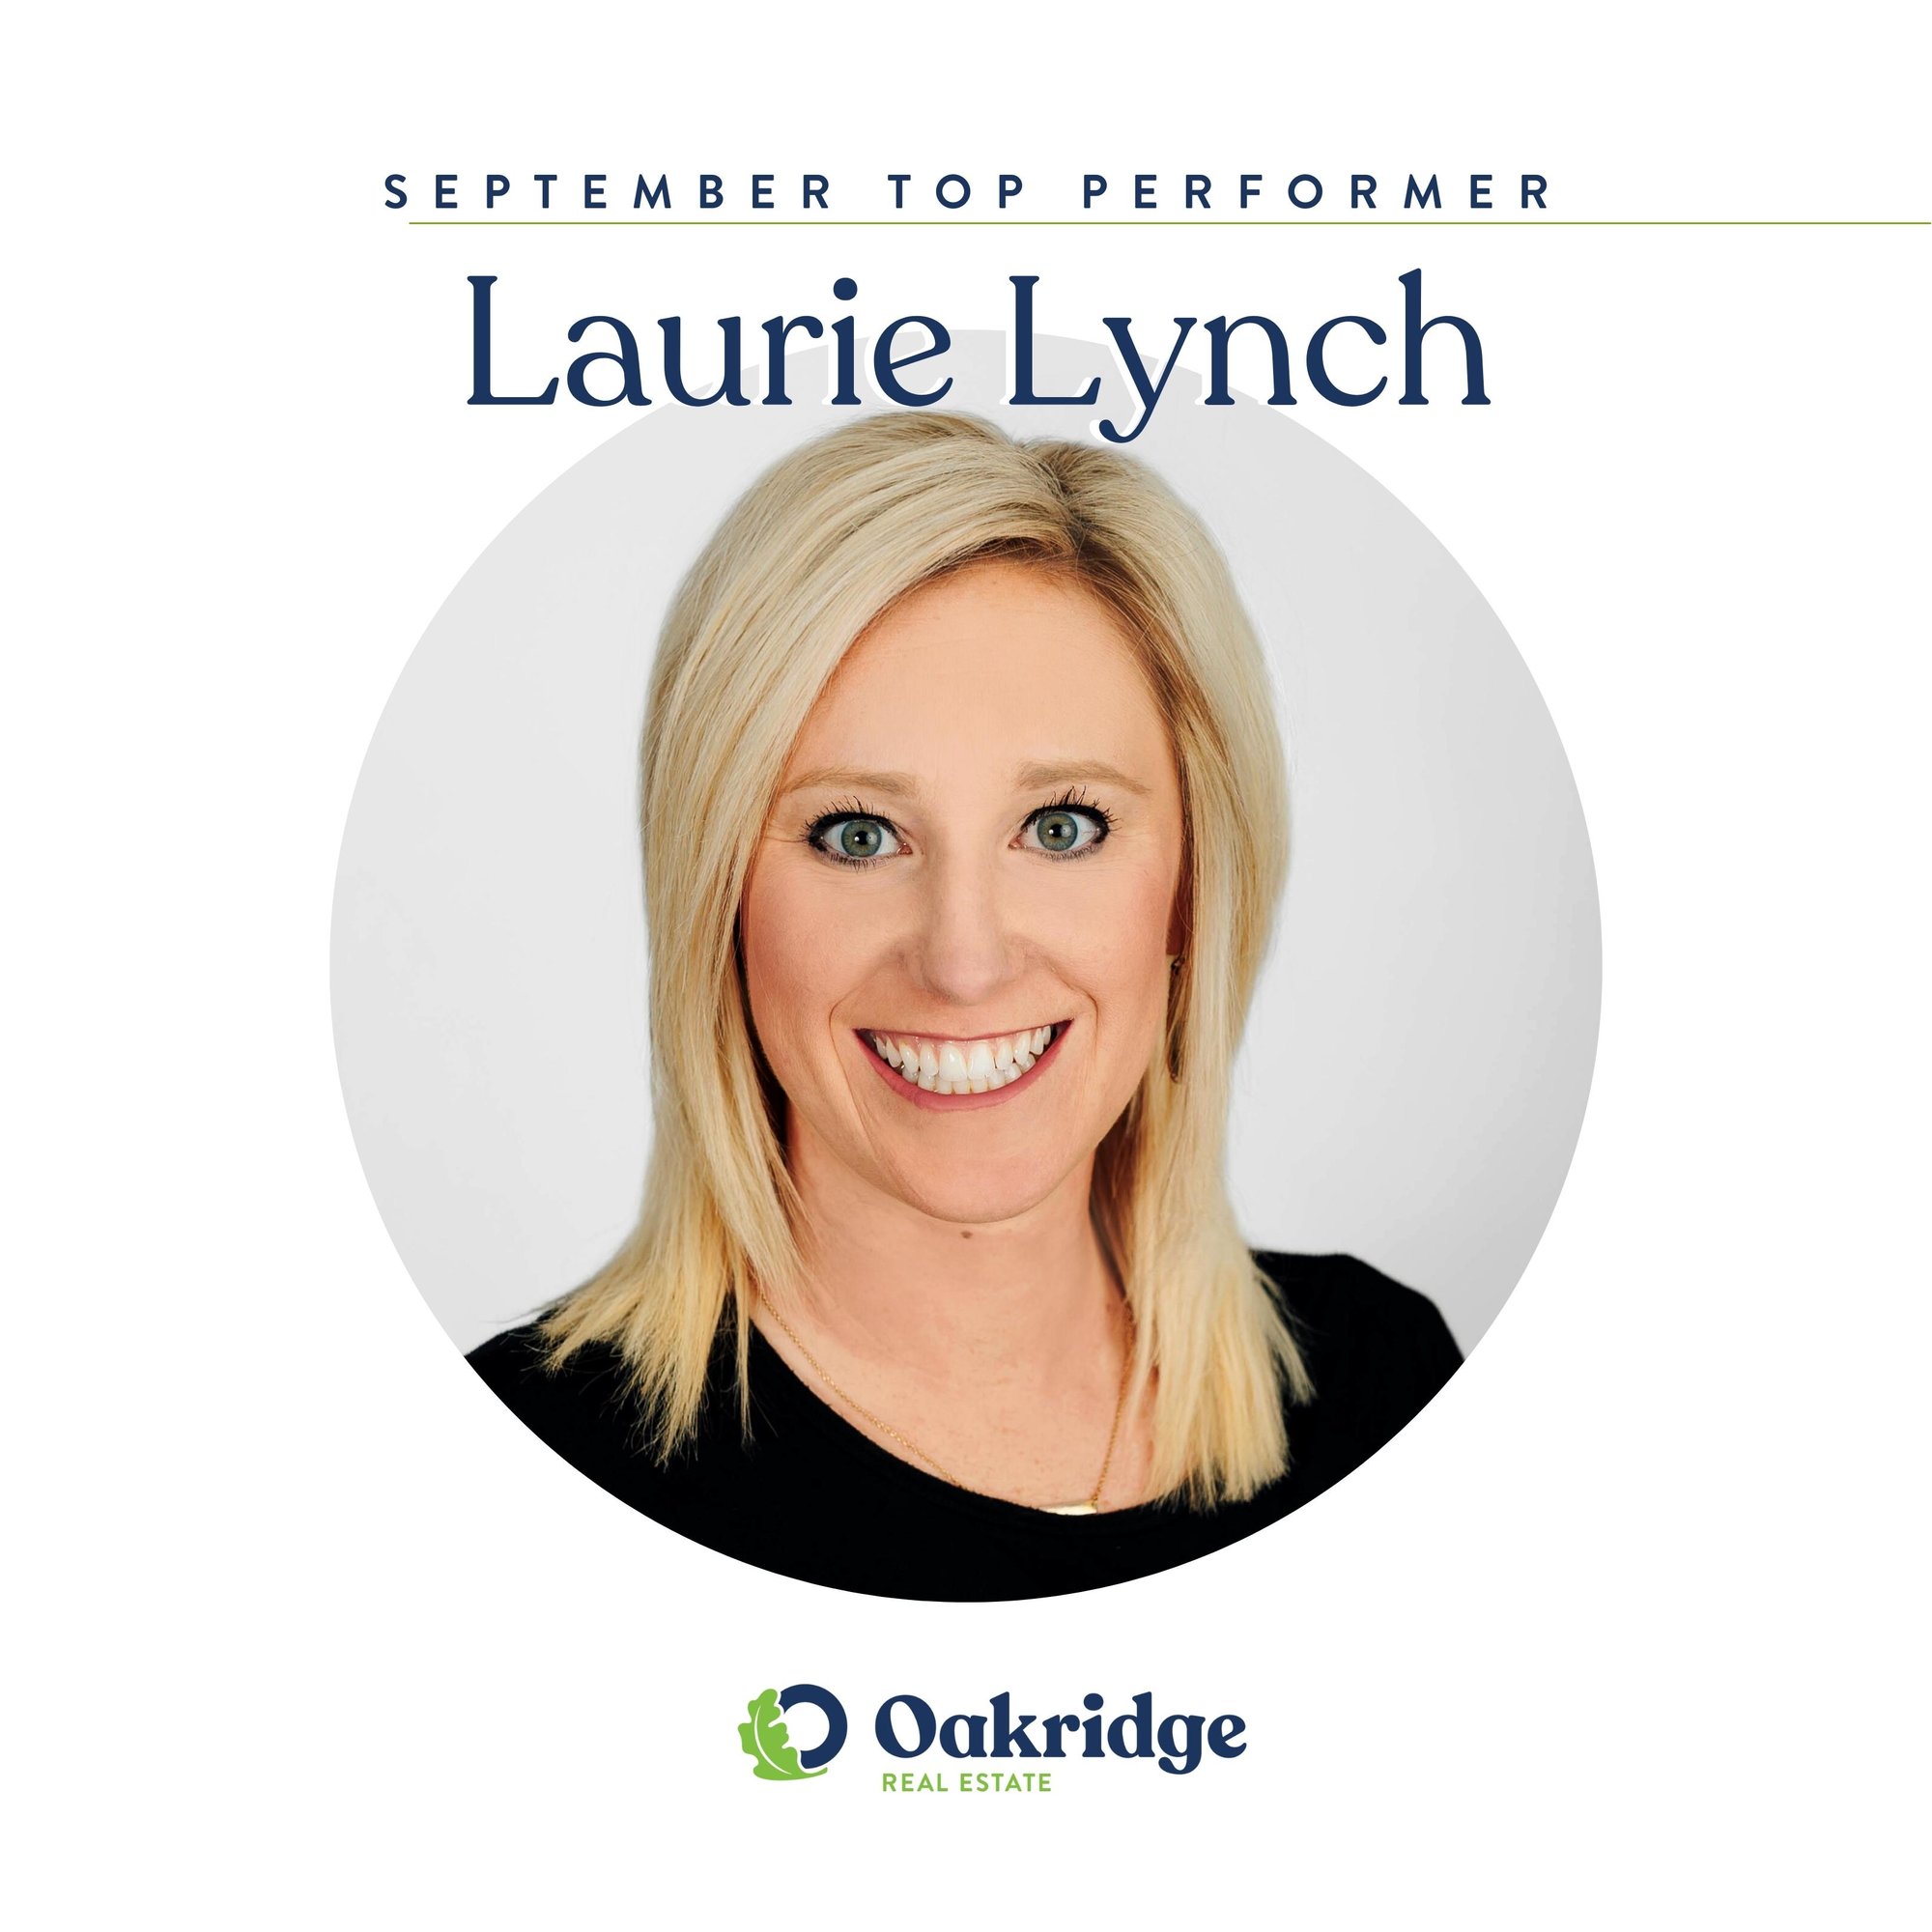 Laurie Lynch September Top Performer | Oakridge Real Estate